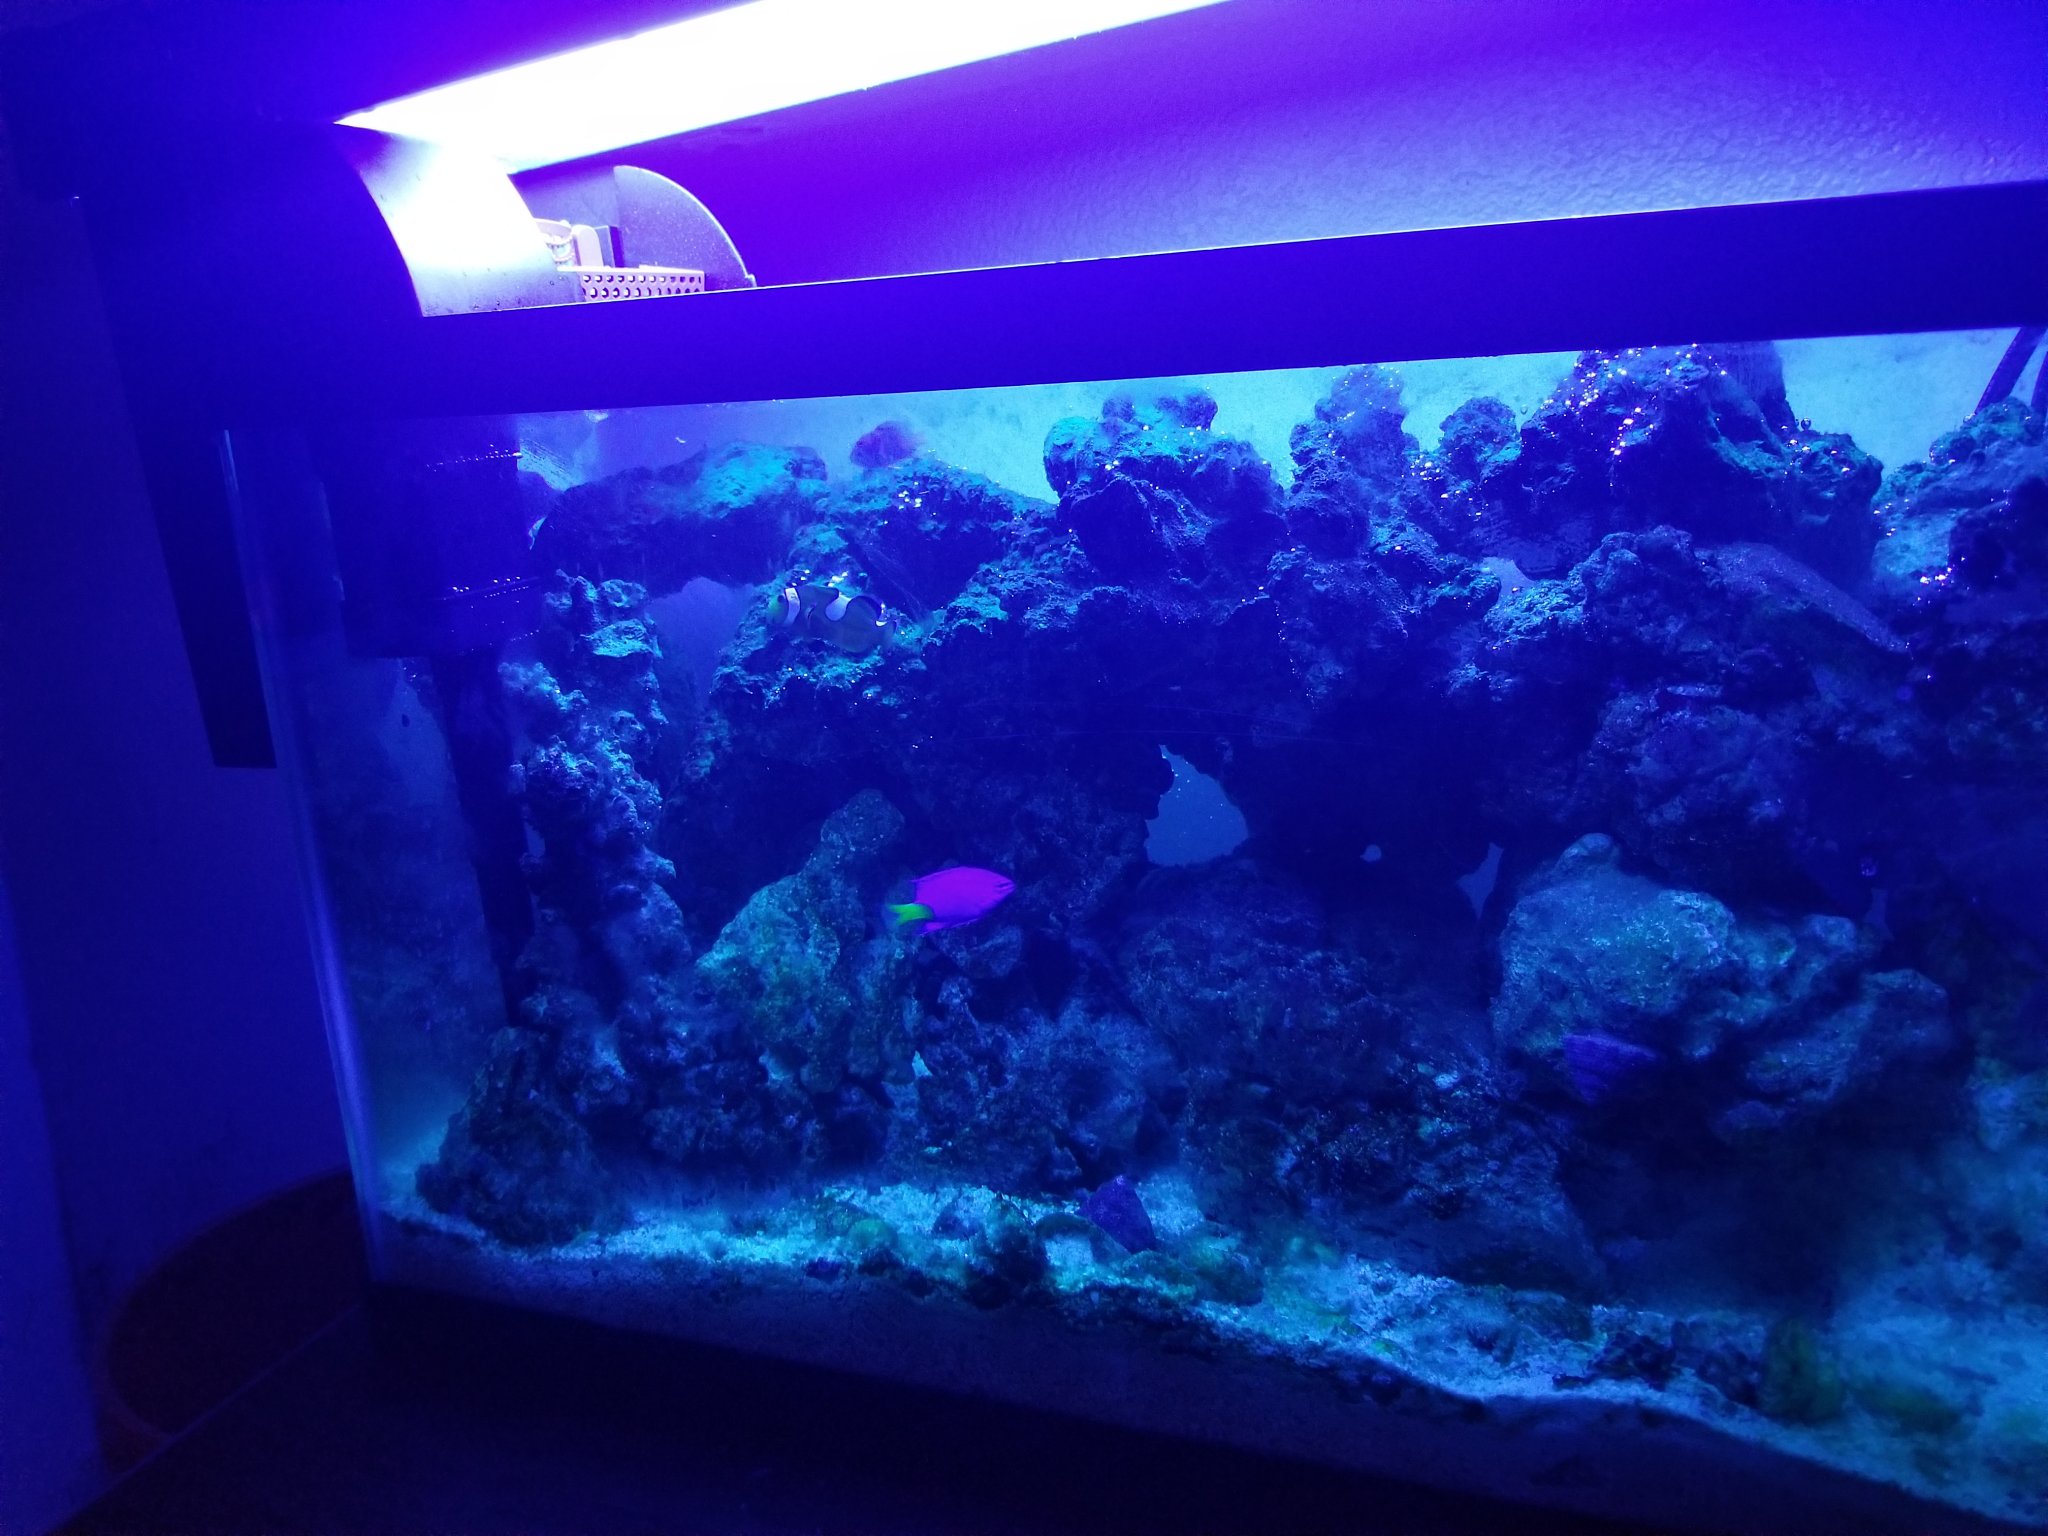 10 gallon nano reef